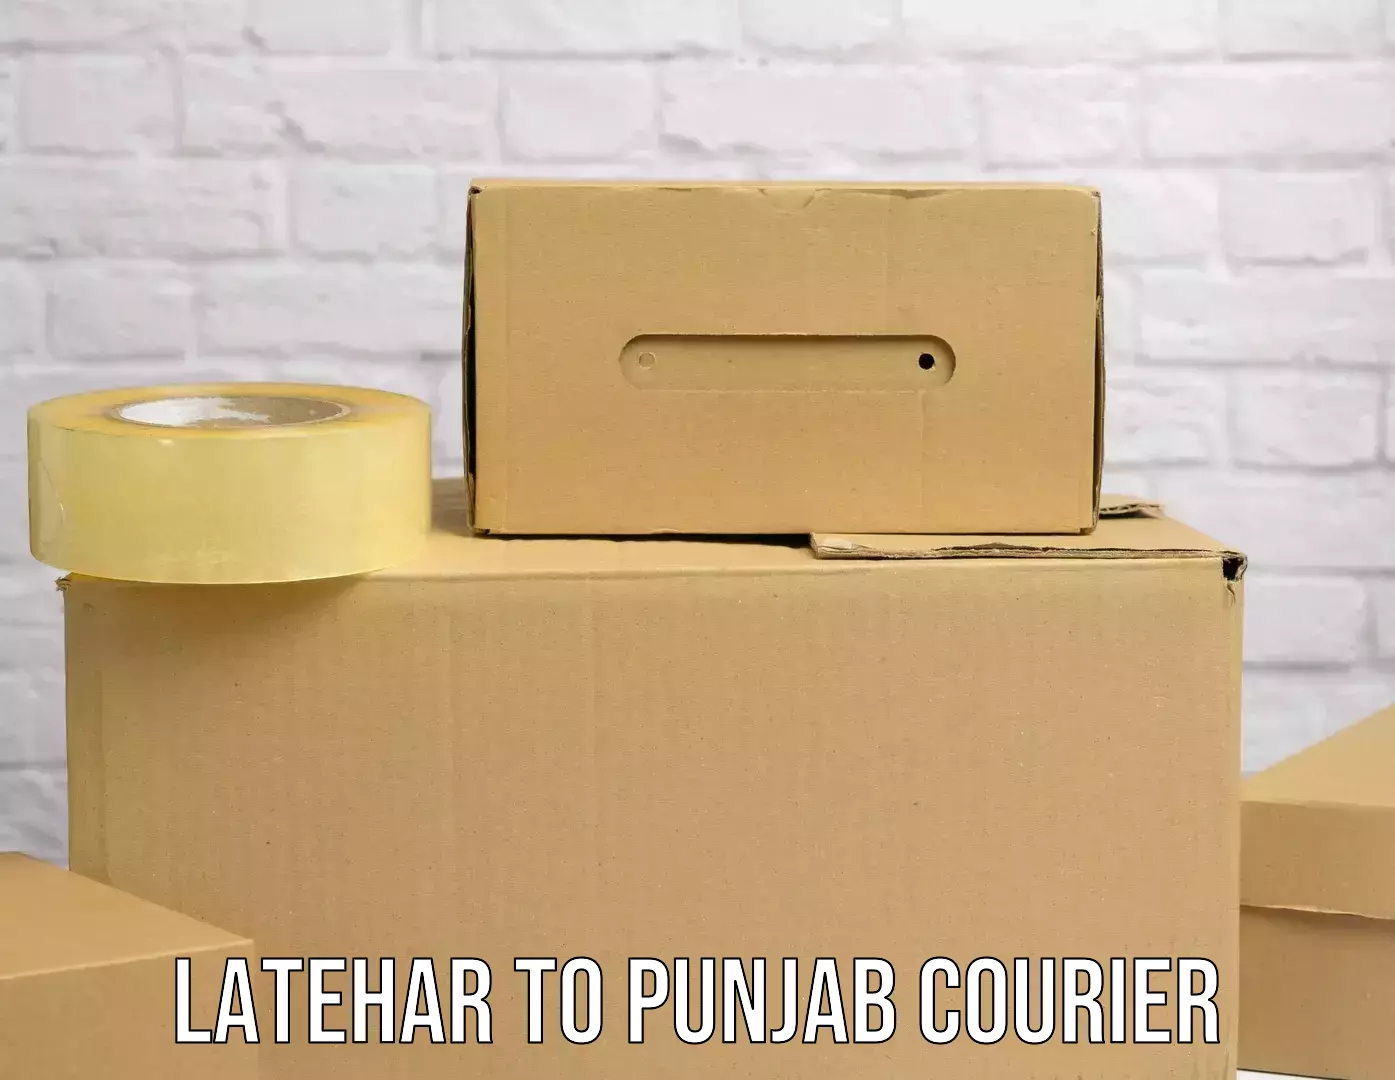 Digital courier platforms Latehar to Fatehgarh Sahib